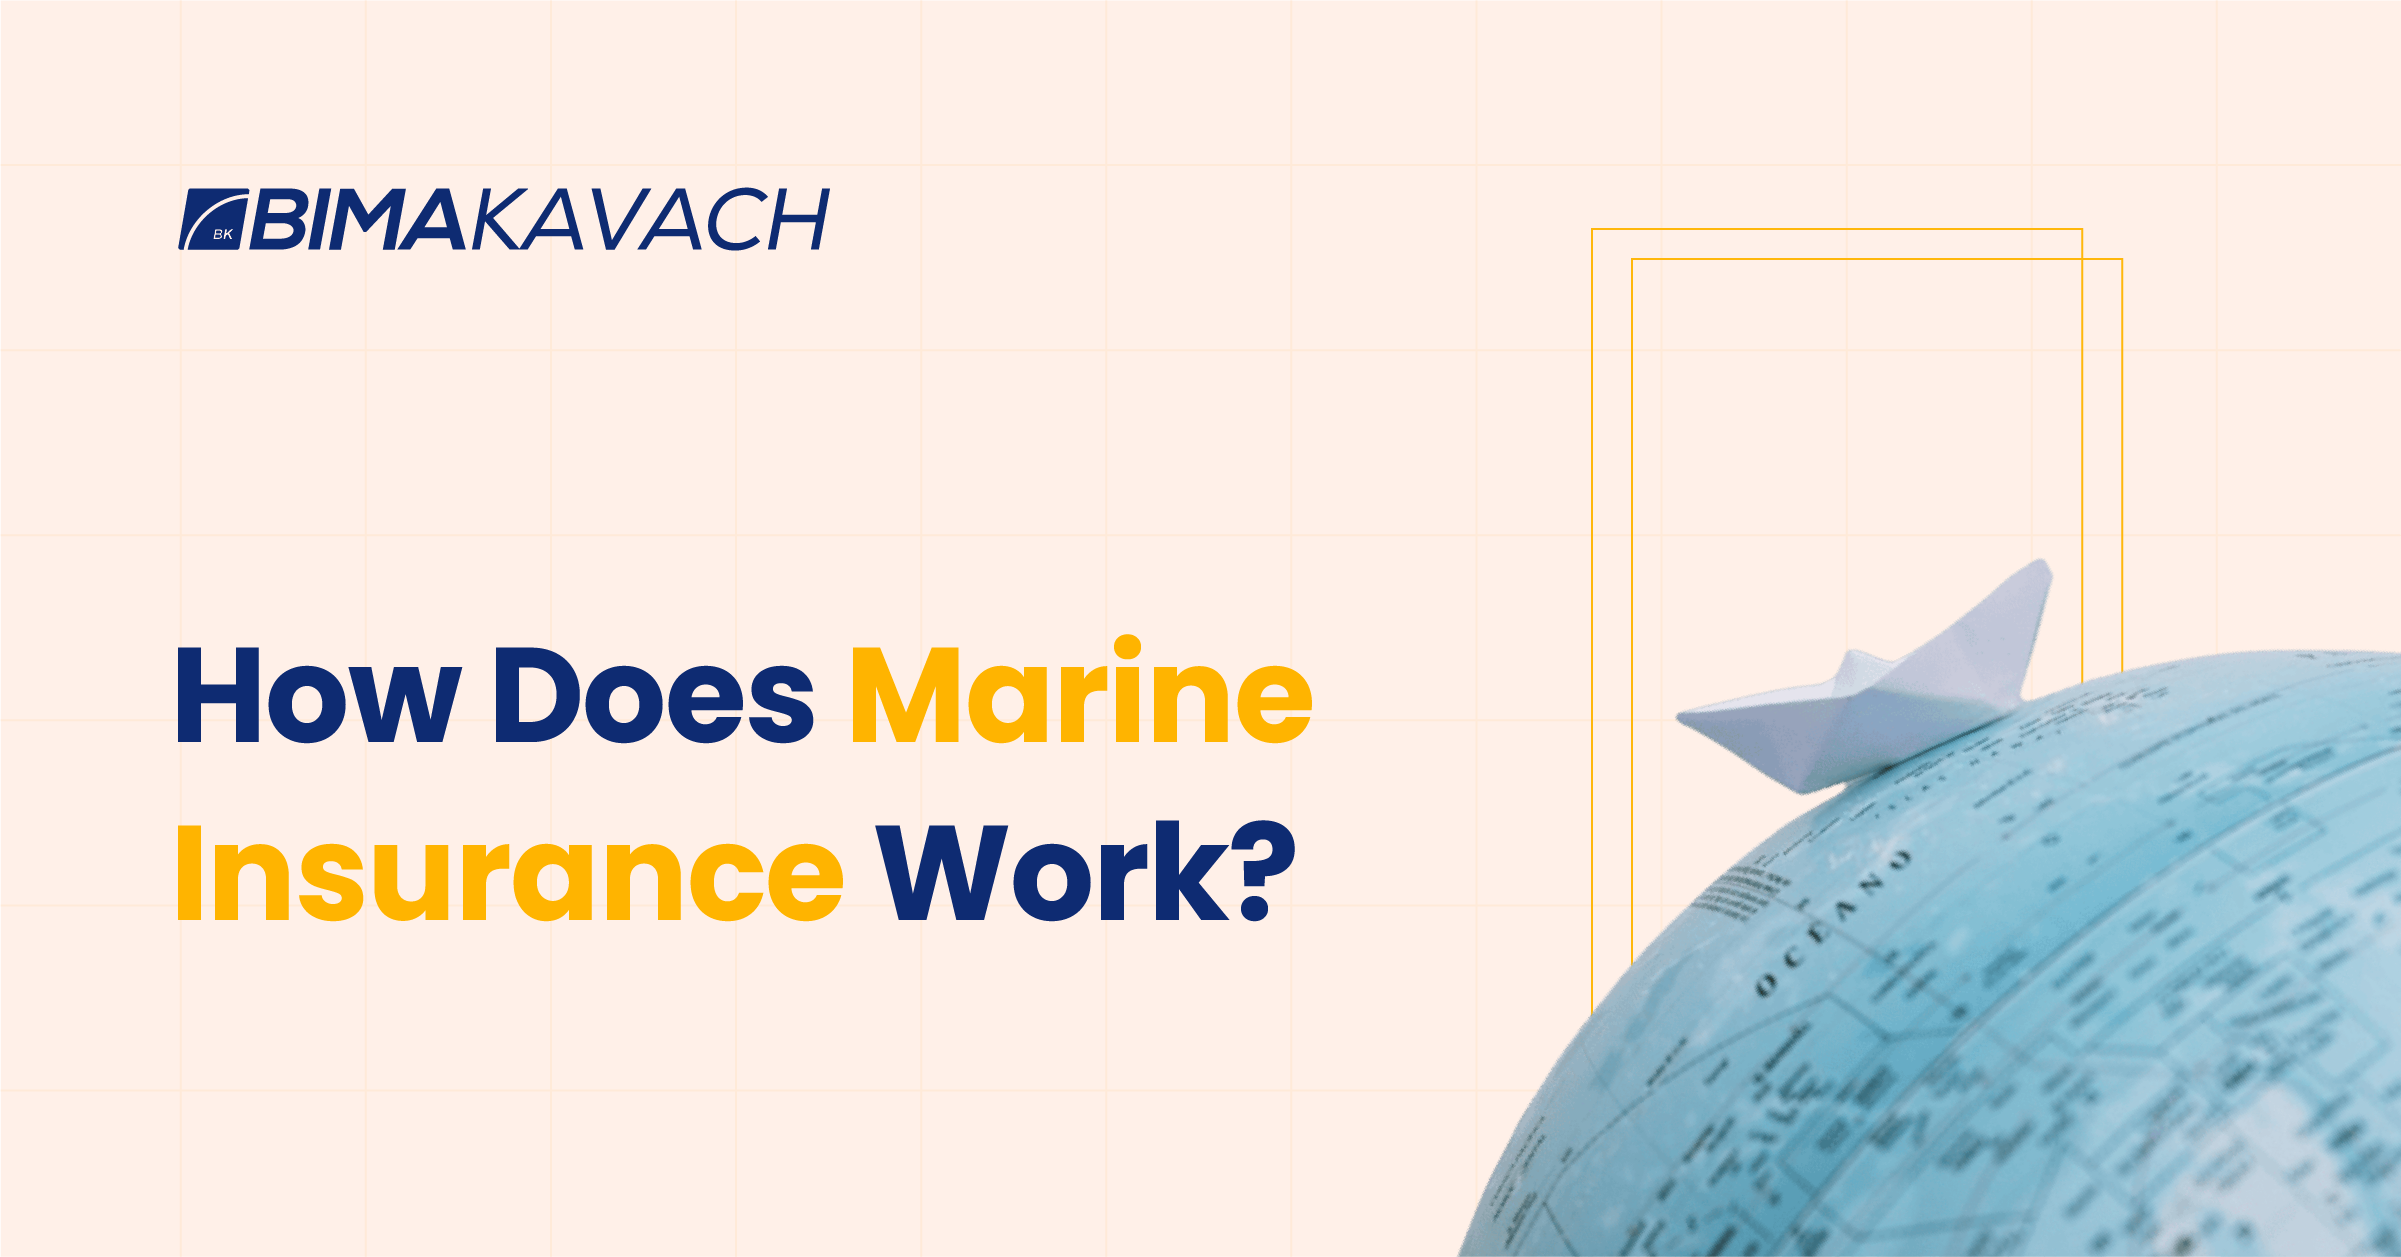 How does Marine Insurance Work?